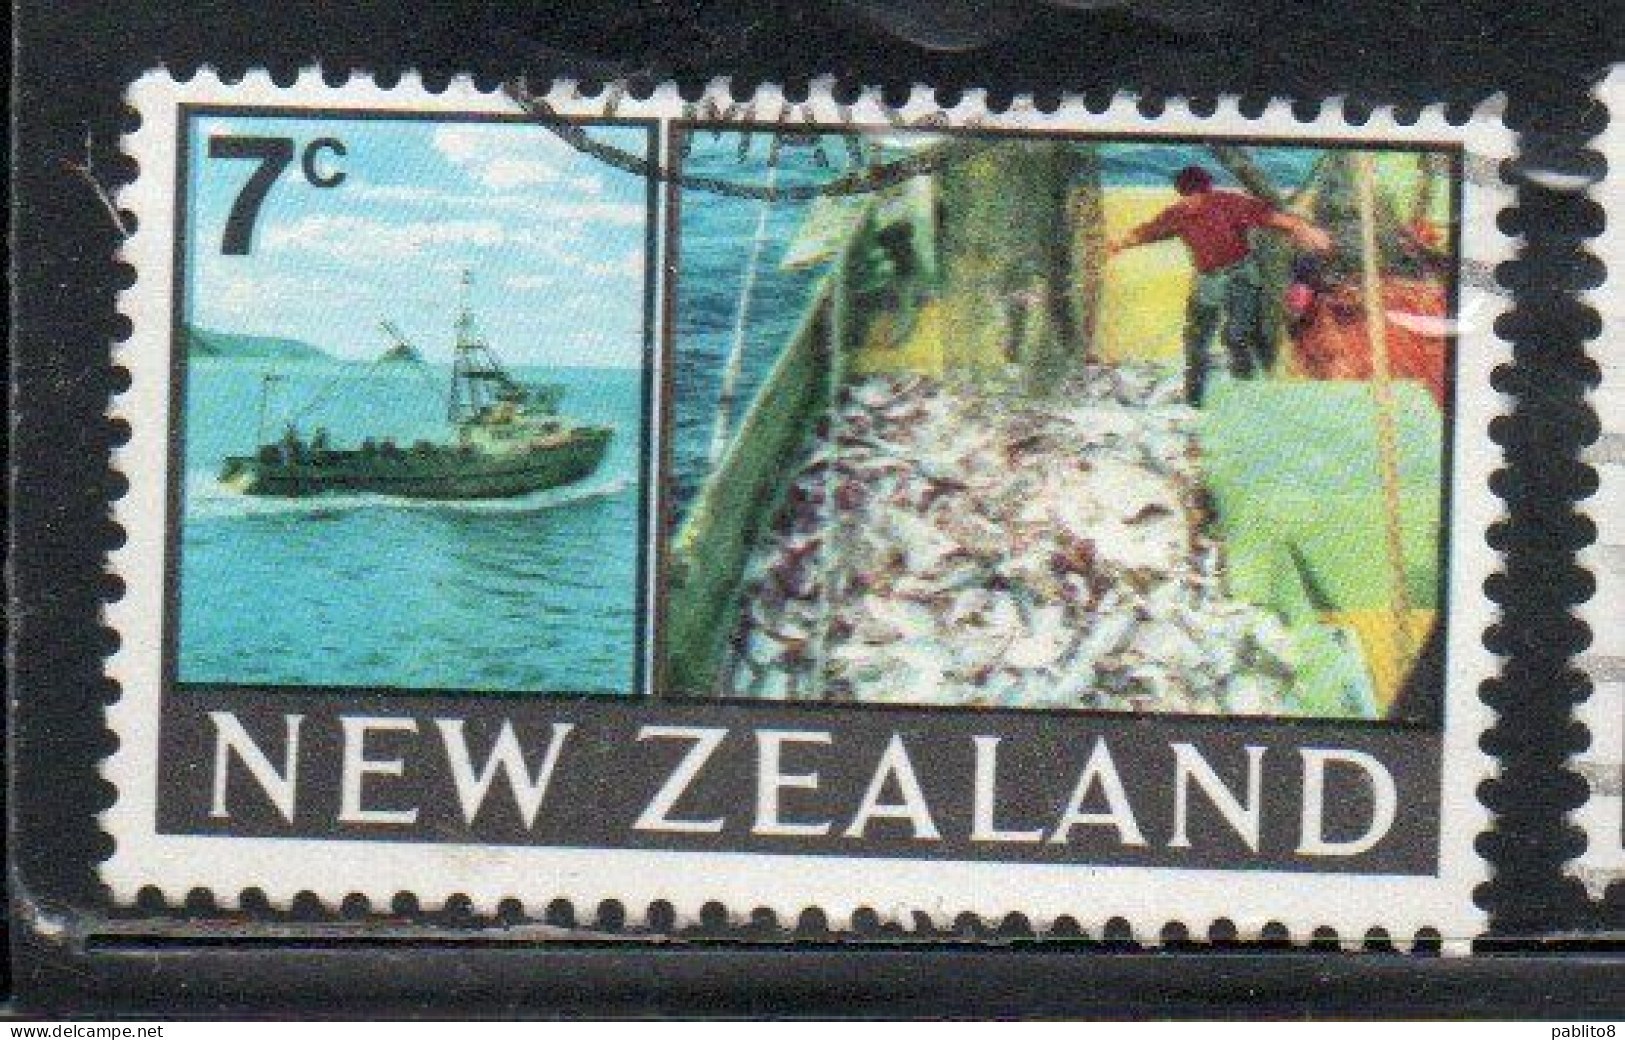 NEW ZEALAND NUOVA ZELANDA 1968 1969 TRAWLER AND CATCH 7c USED USATO OBLITERE' - Used Stamps